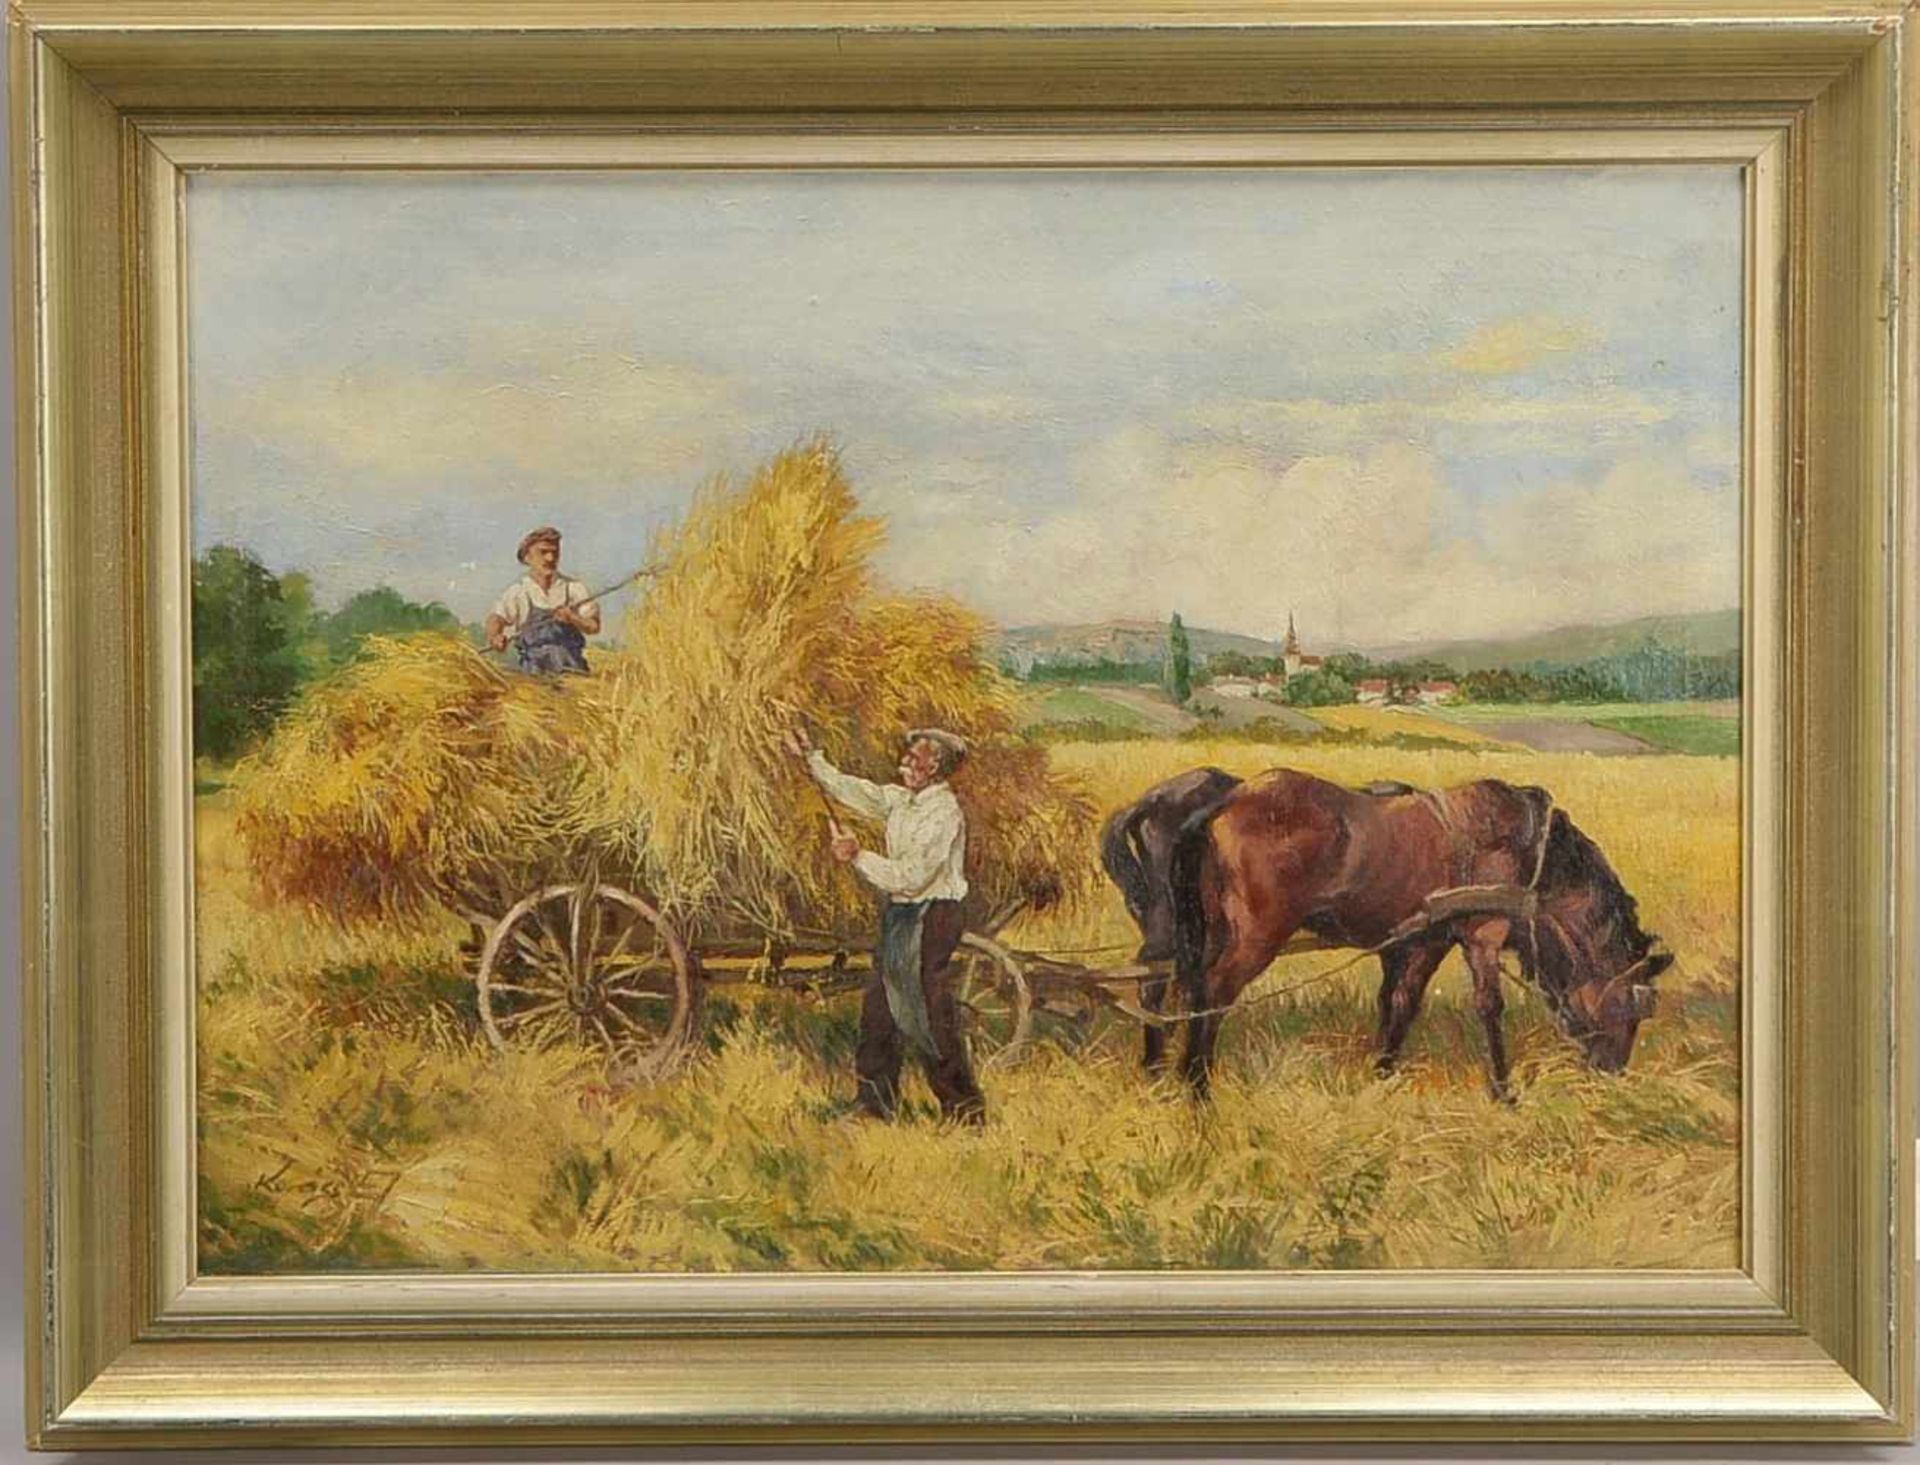 Kovacs, 'Ernte', Öl/Lw, unten links signiert; Bildmaße 50 x 70 cm, Rahmenmaße 64 x 84 cm